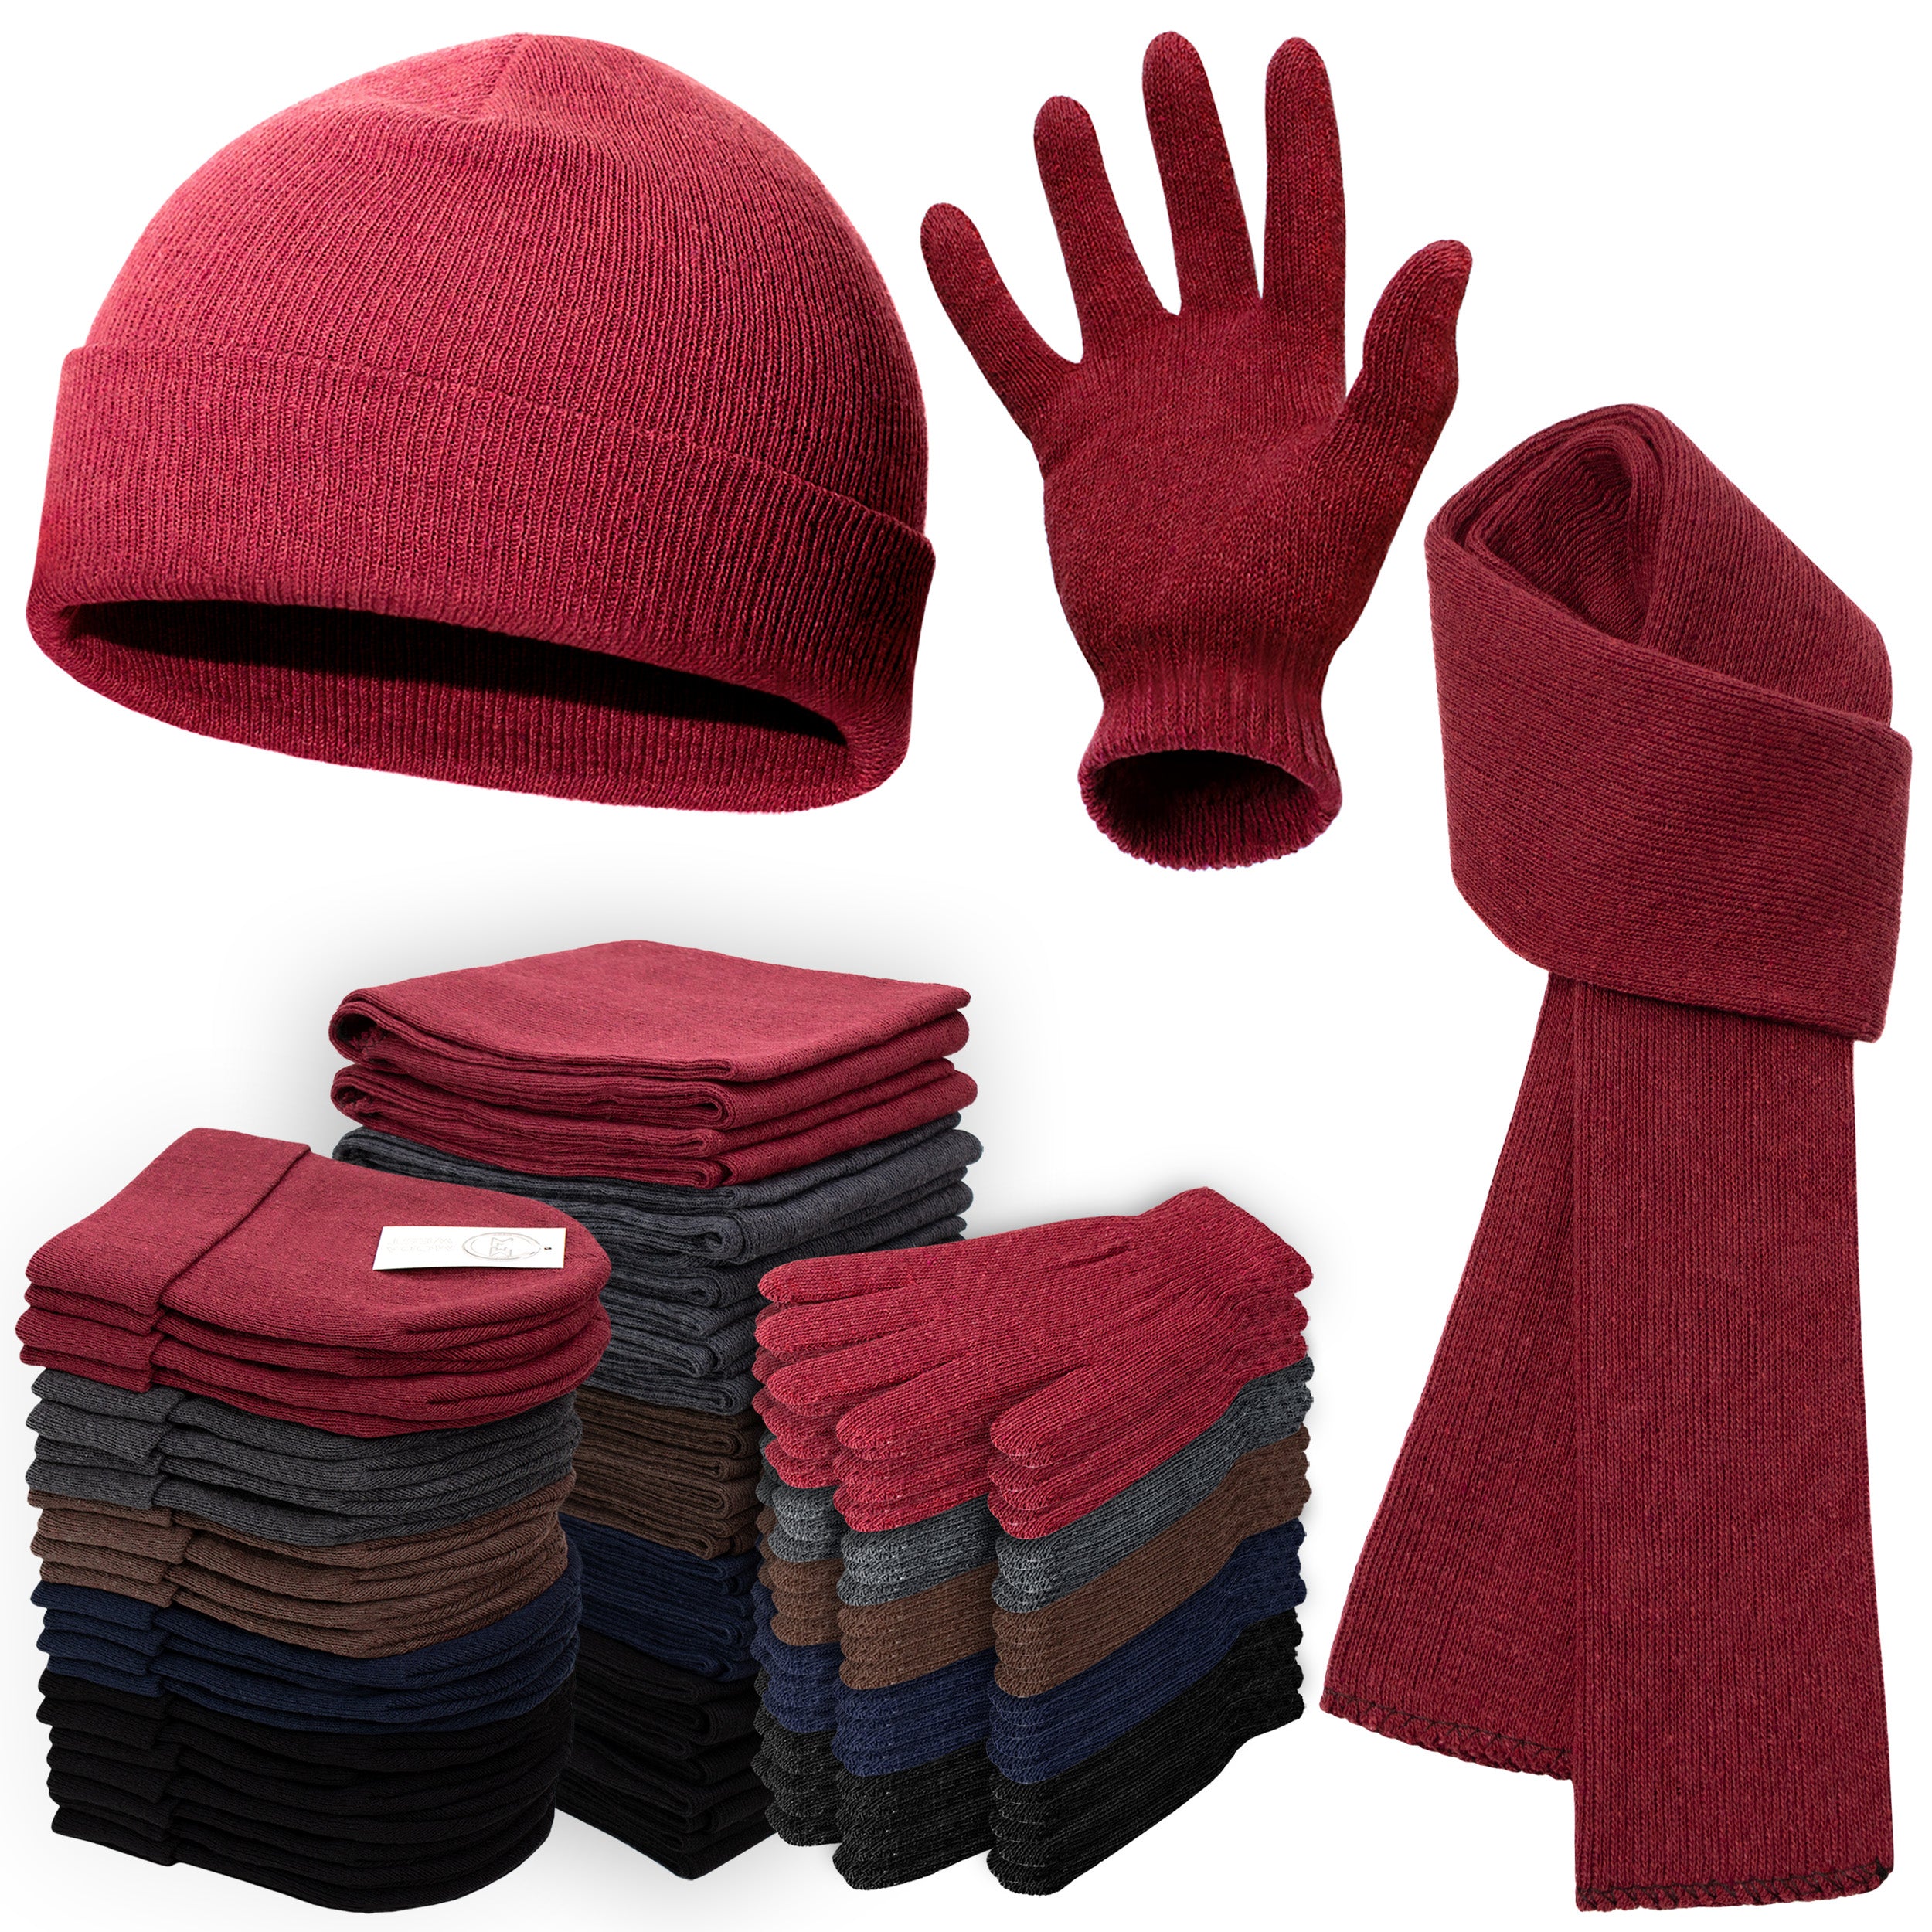 Wholesale Unisex Winter Gloves, Scarves, Beanie Hats - Bulk Case Includes 24 Beanies, 24 Gloves, 24 Scarves